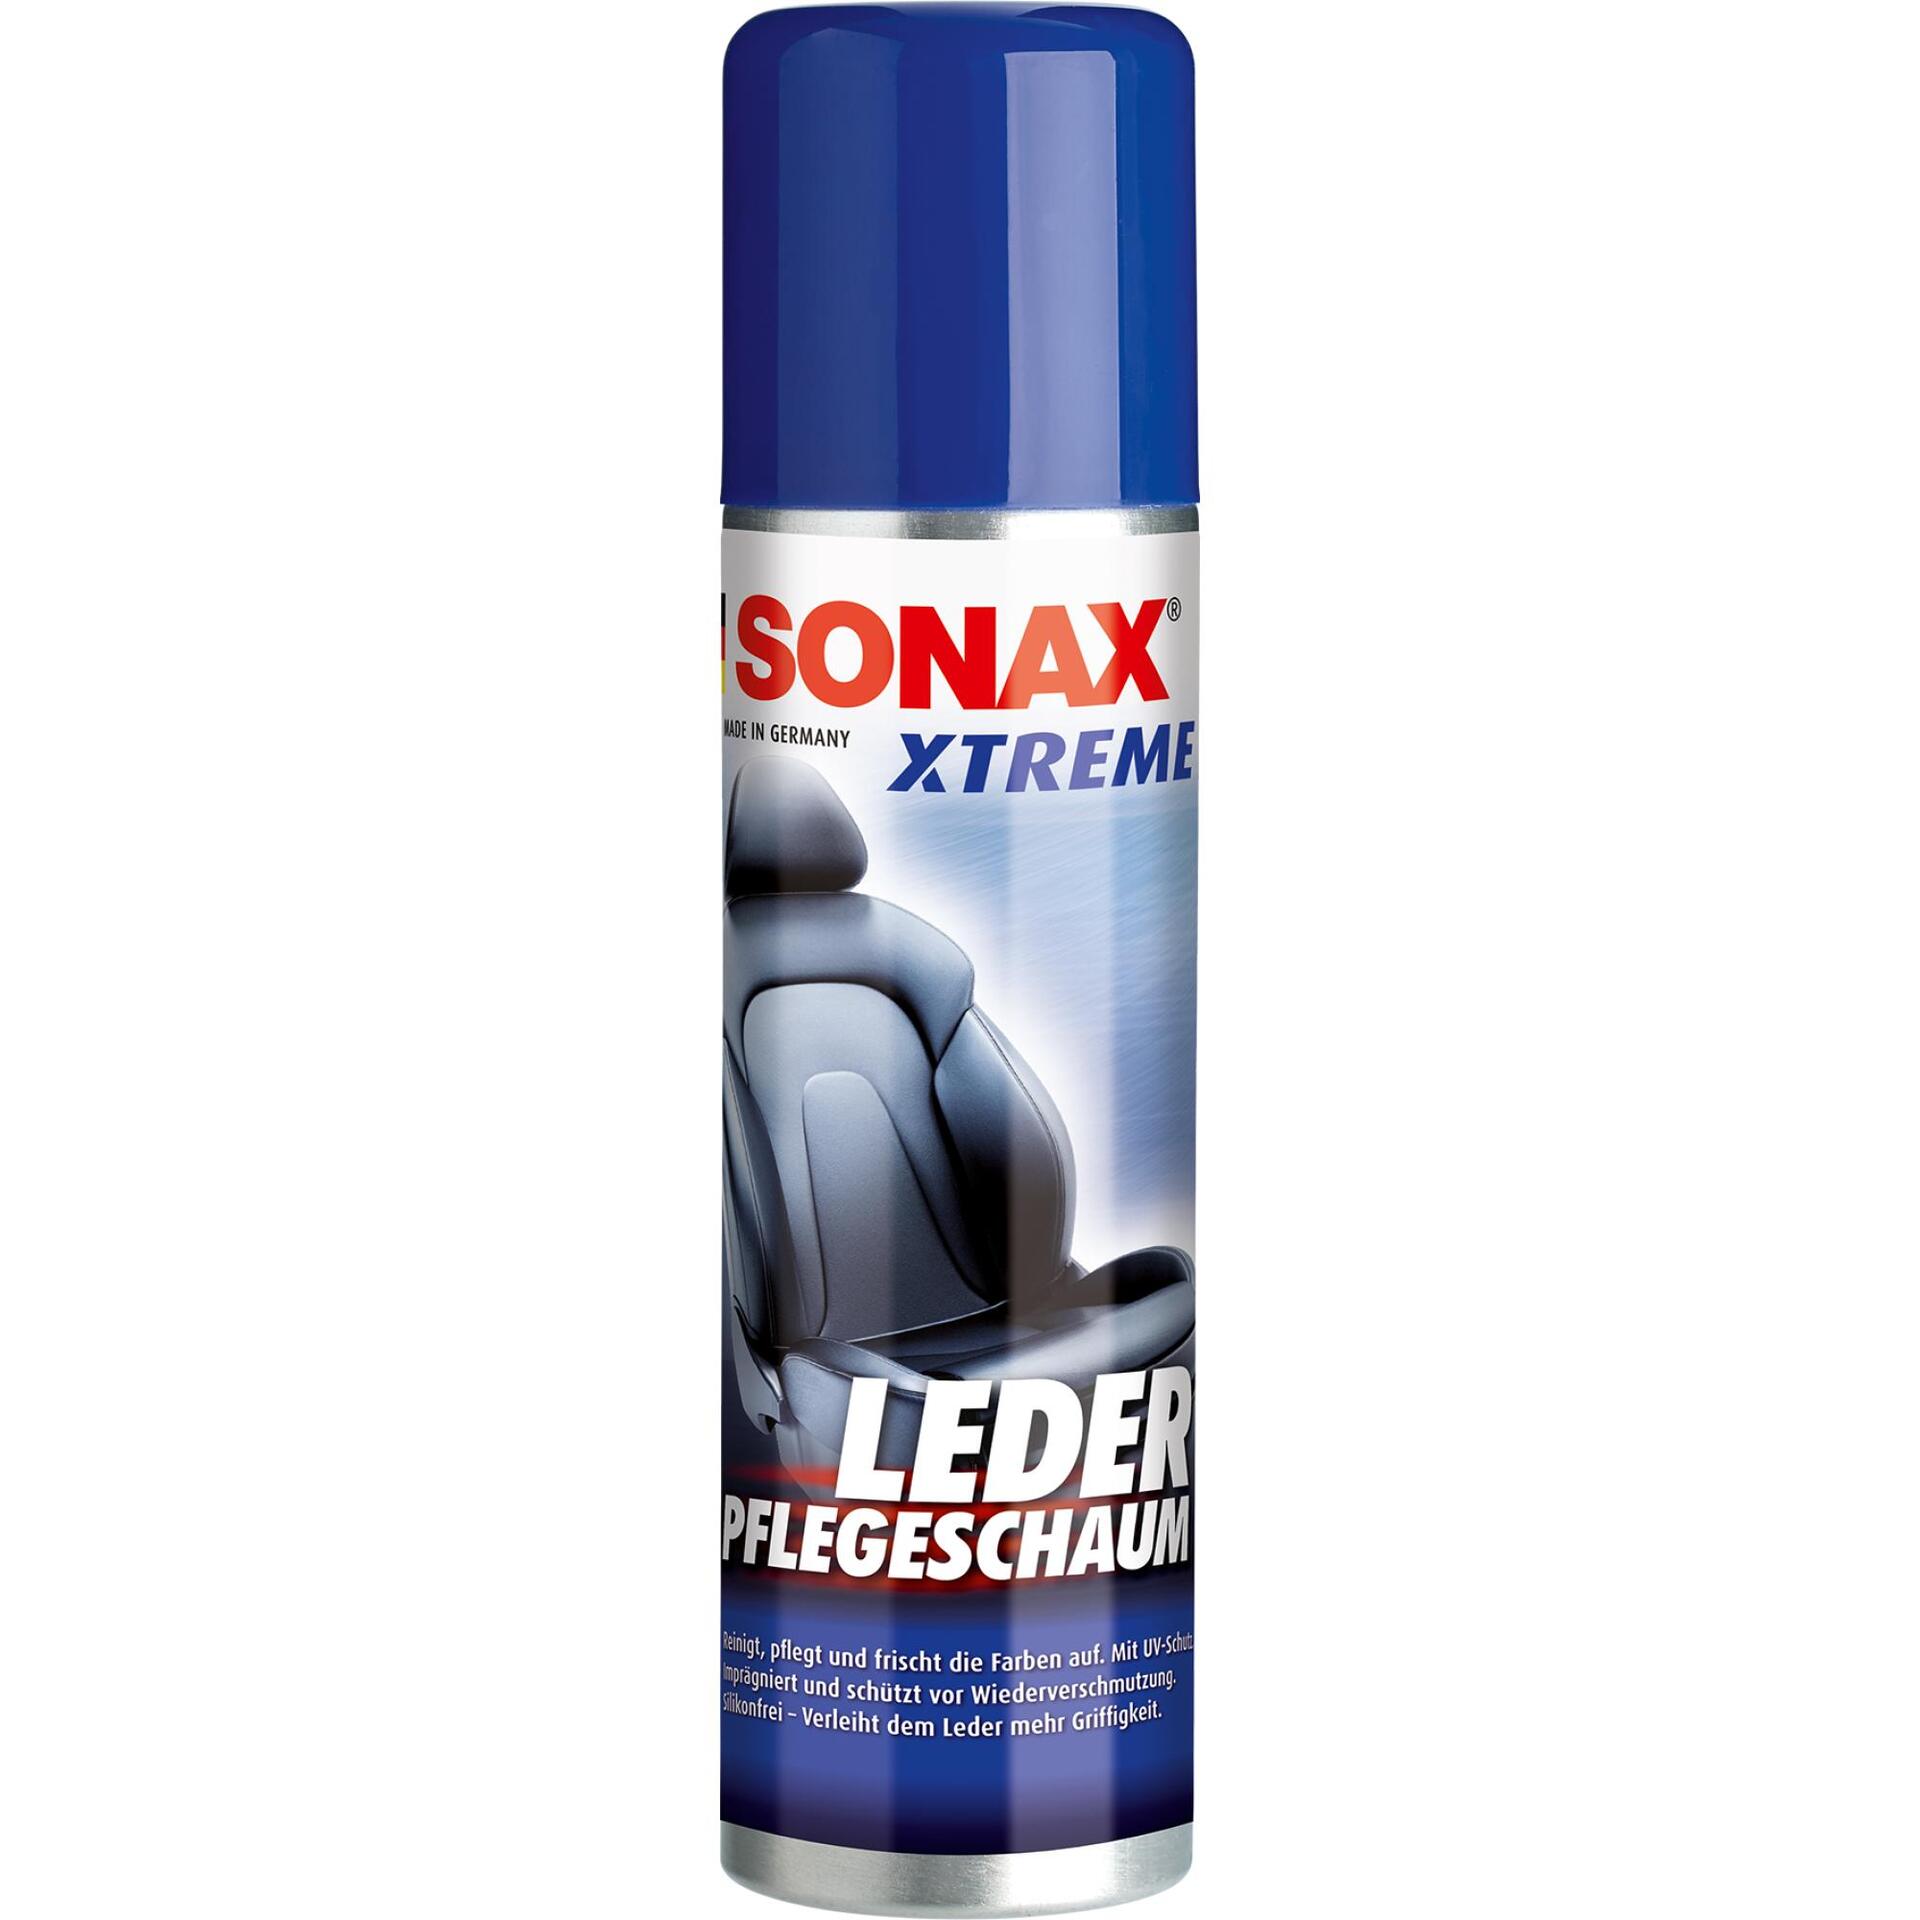 SONAX Leder-Pflege-Schaum 250ml